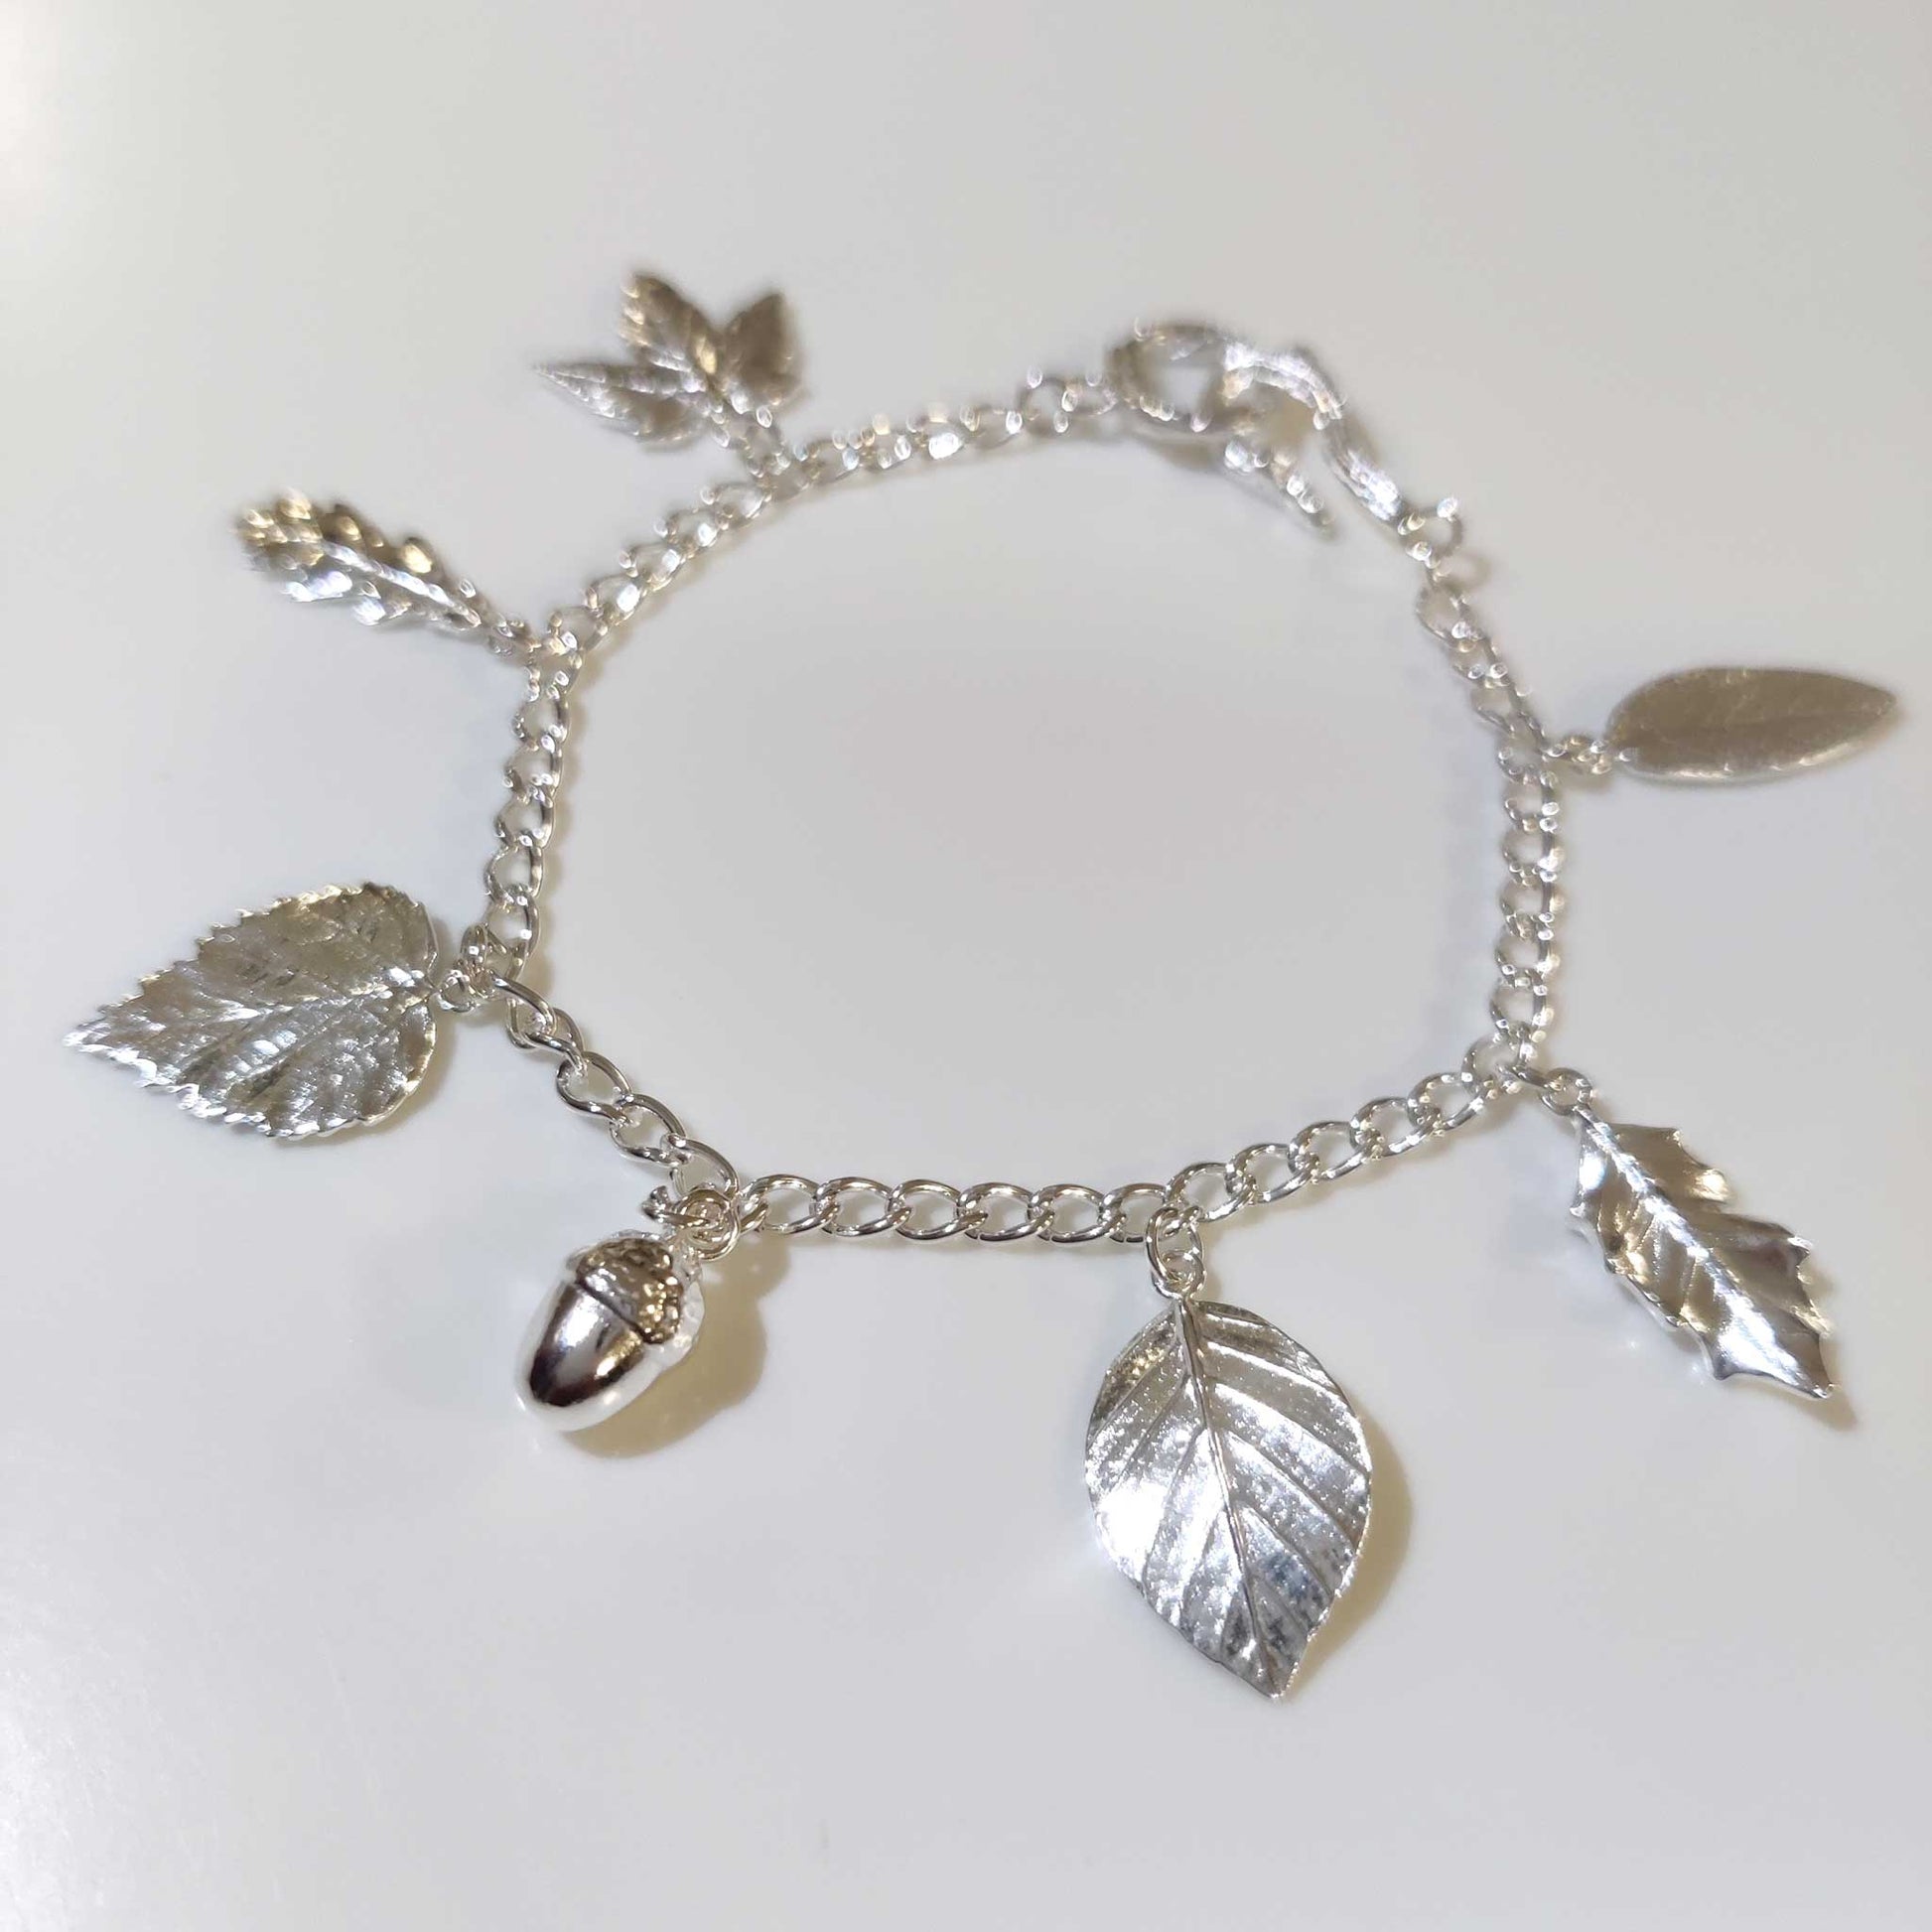 Woodland charm bracelet in sterling silver